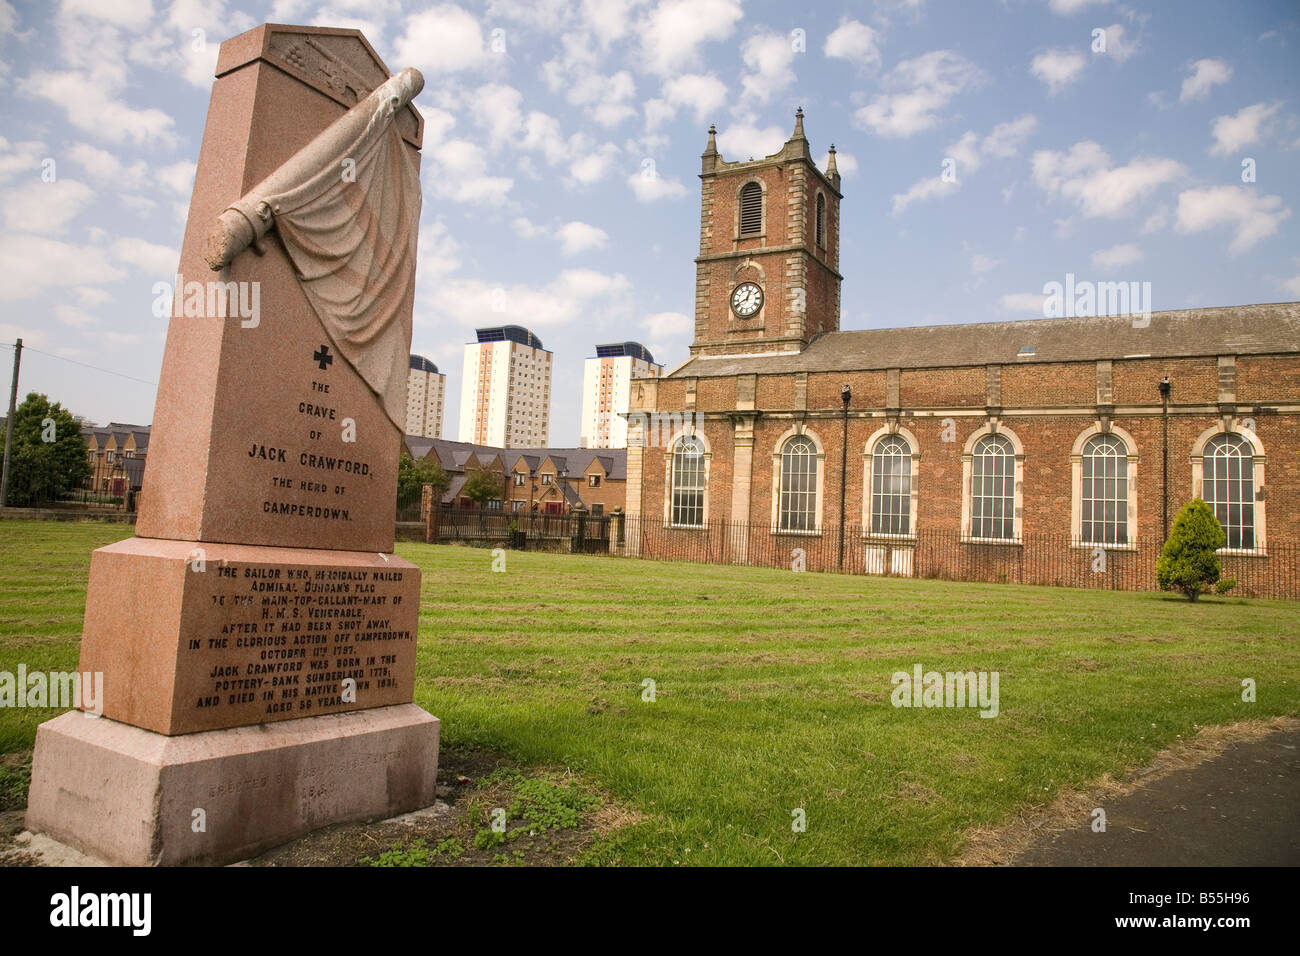 The gravestone of Jack Crawford in the graveyard of Sunderland Old Parish Church. Stock Photo